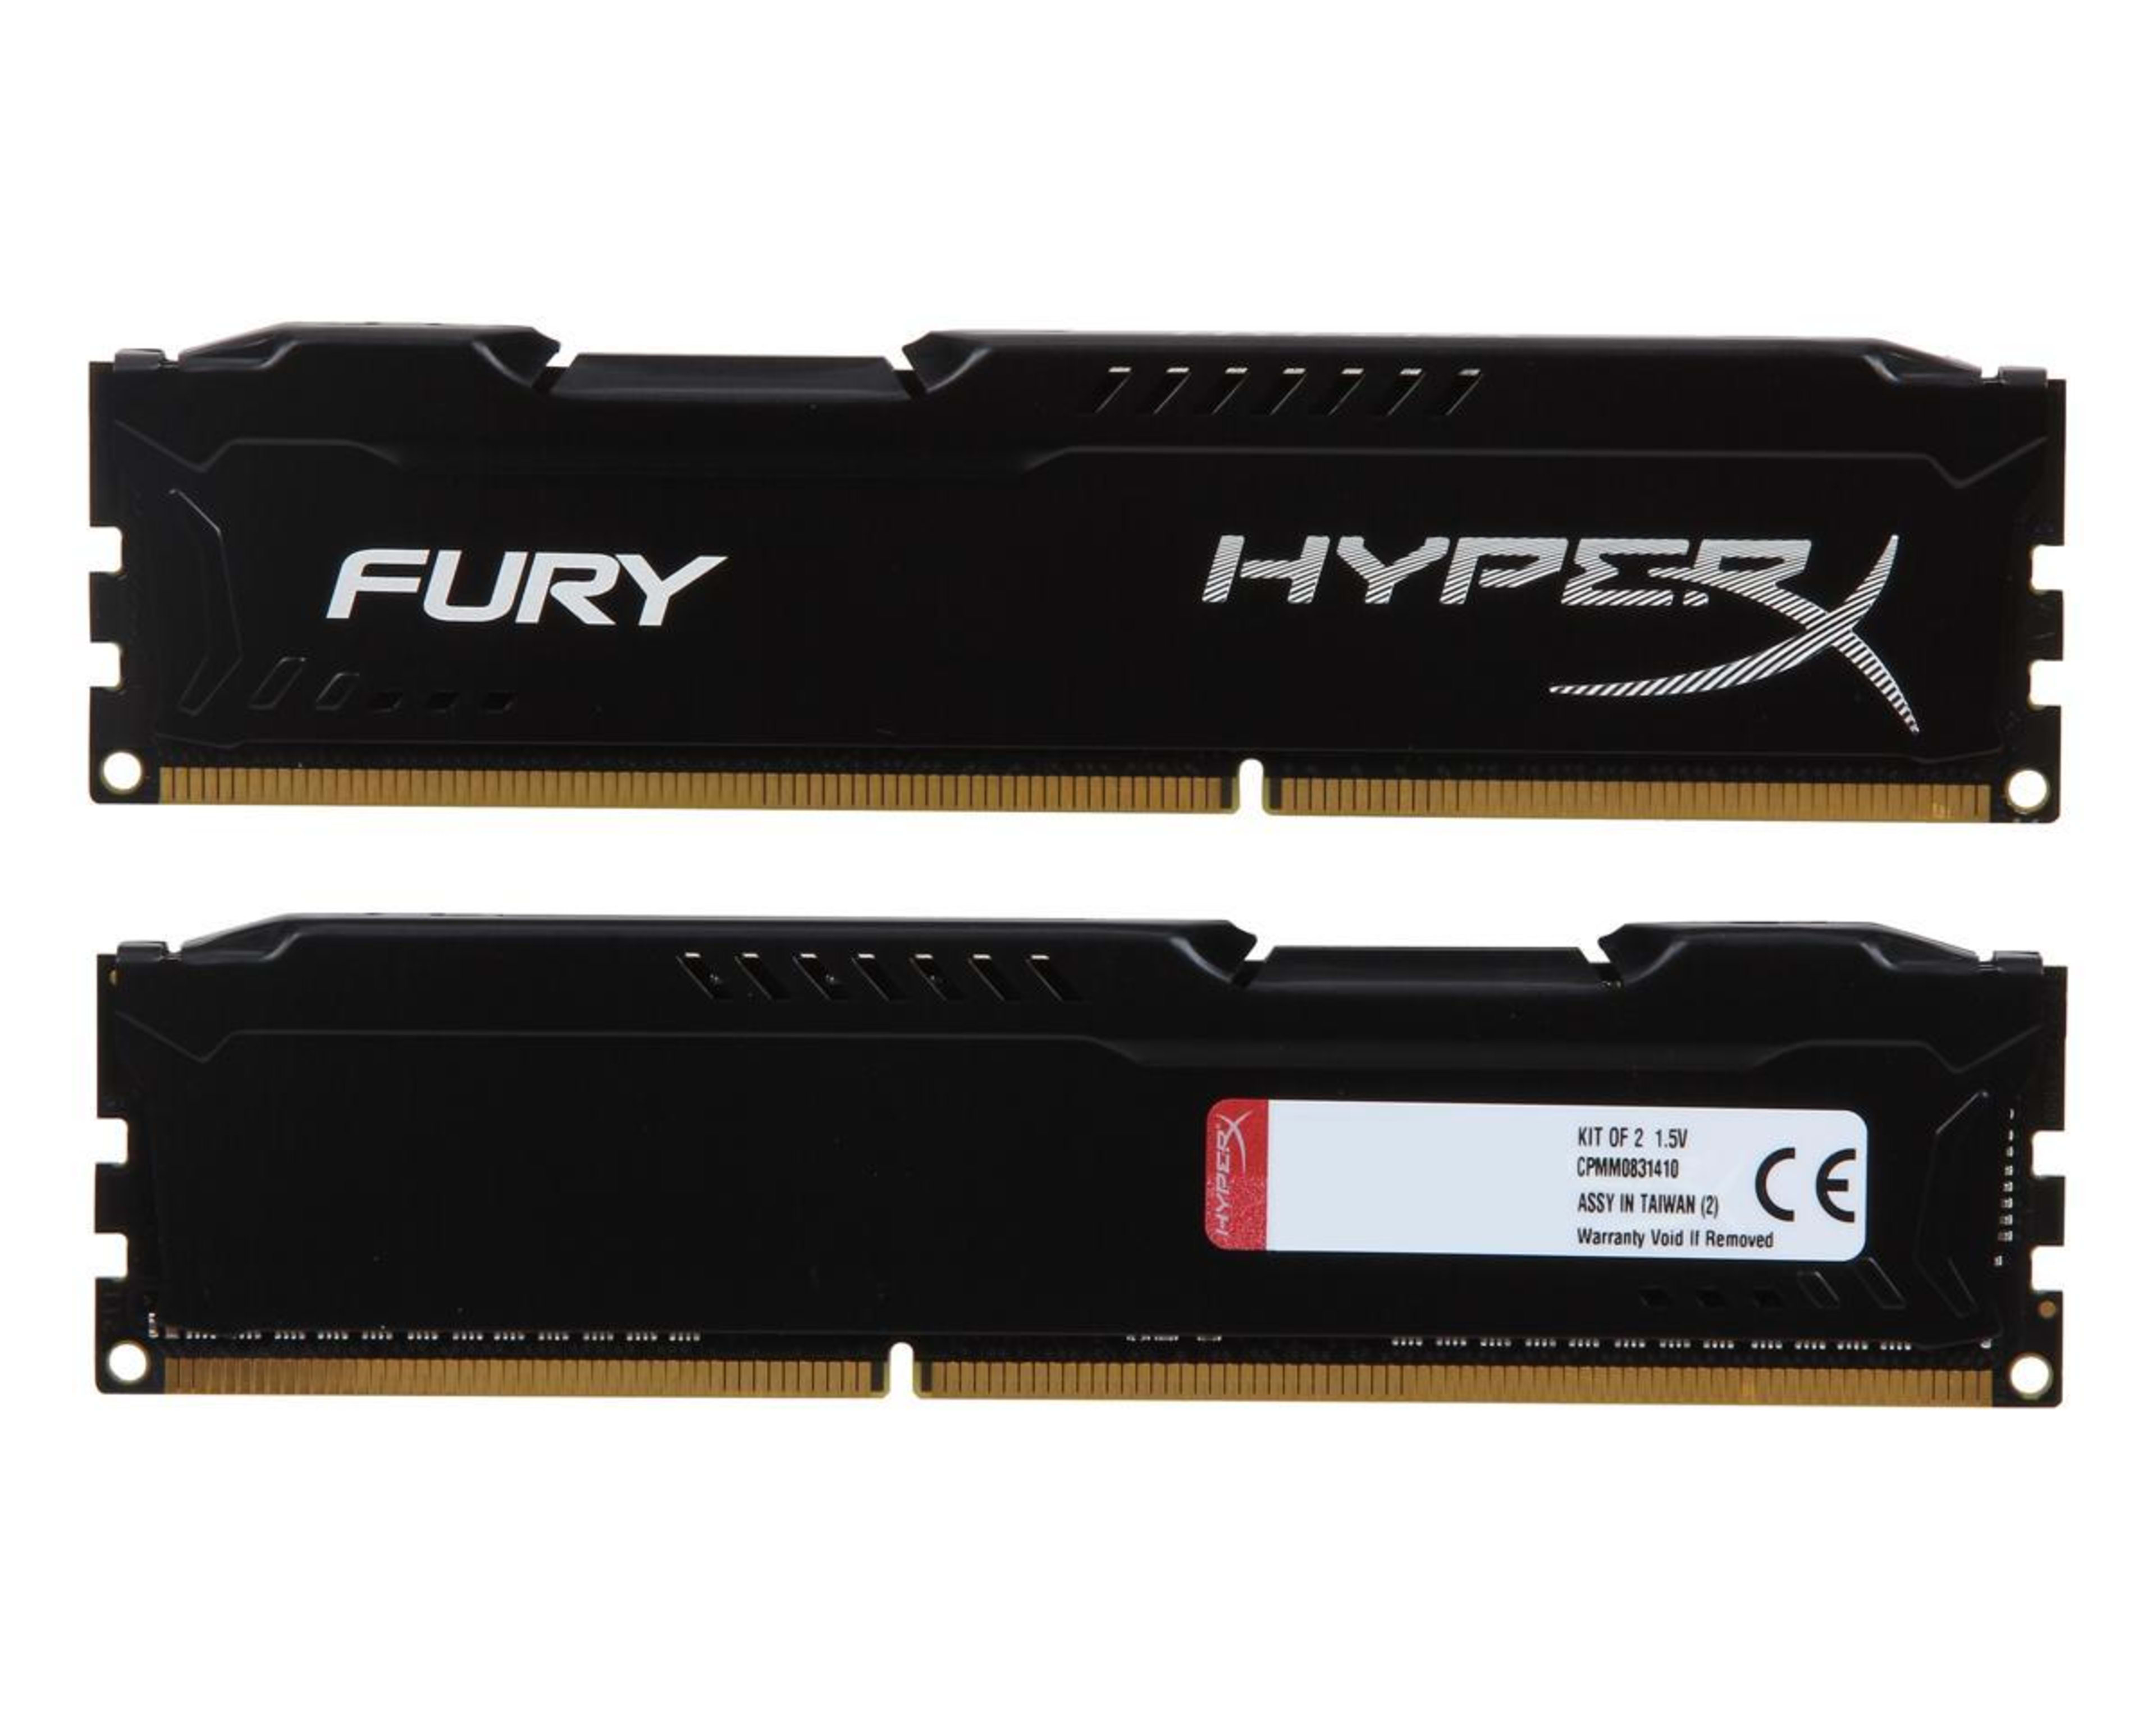 Kingston HyperX FURY Black Series 8GB 1333MHz DDR3 CL9 DIMM (Kit of 2x 4GB) memory